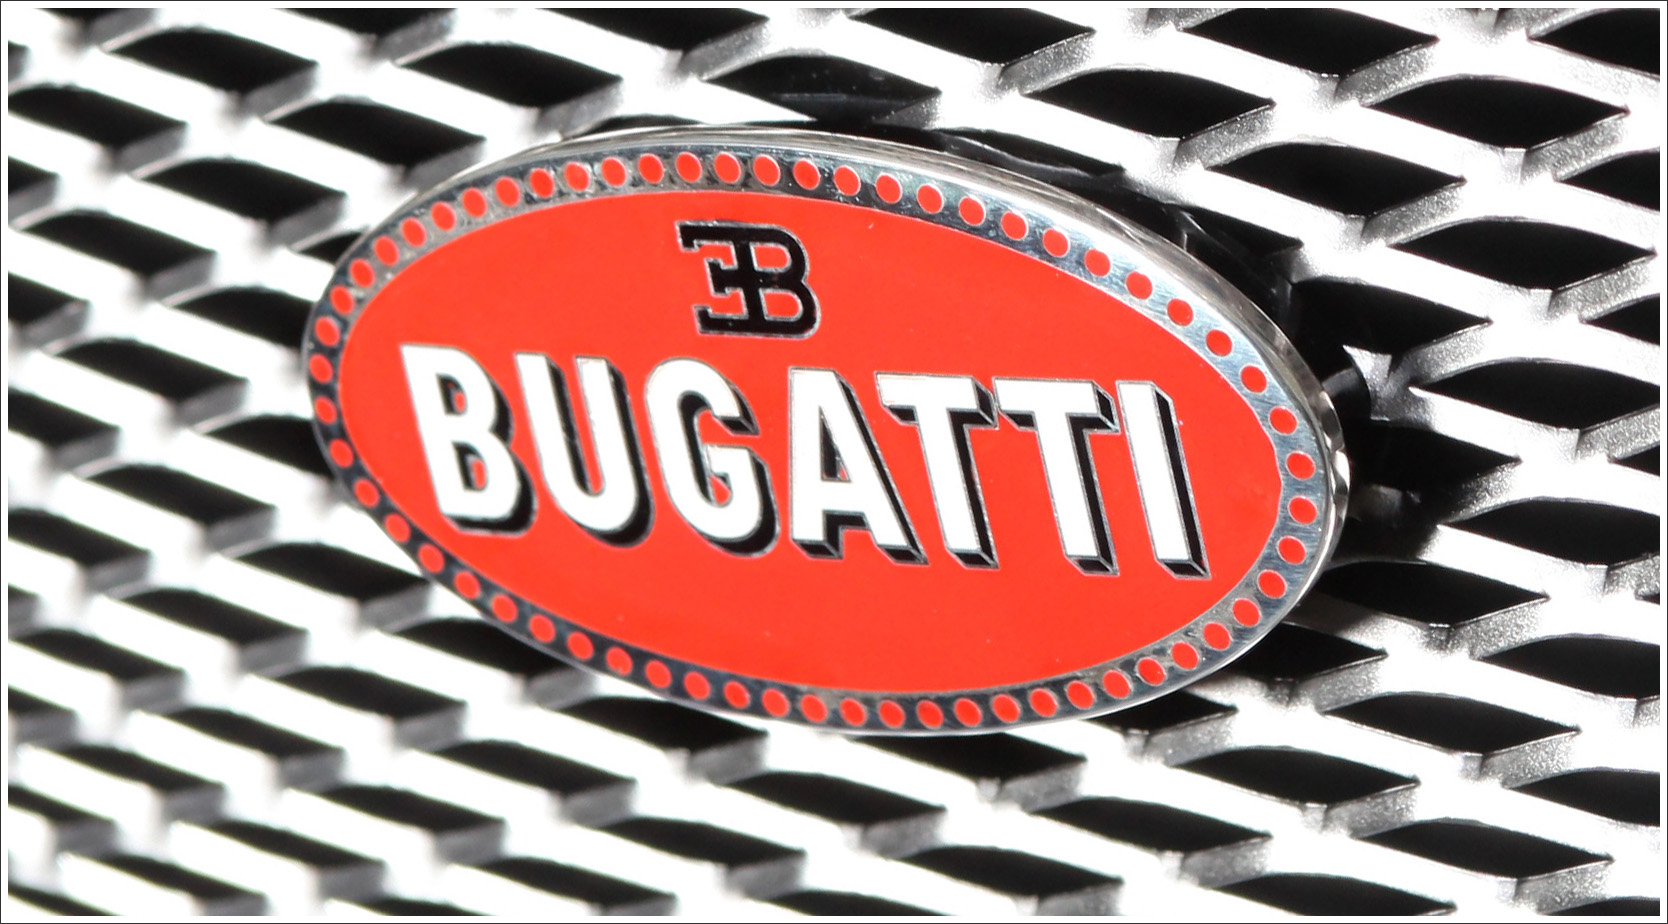 Bugatti logos